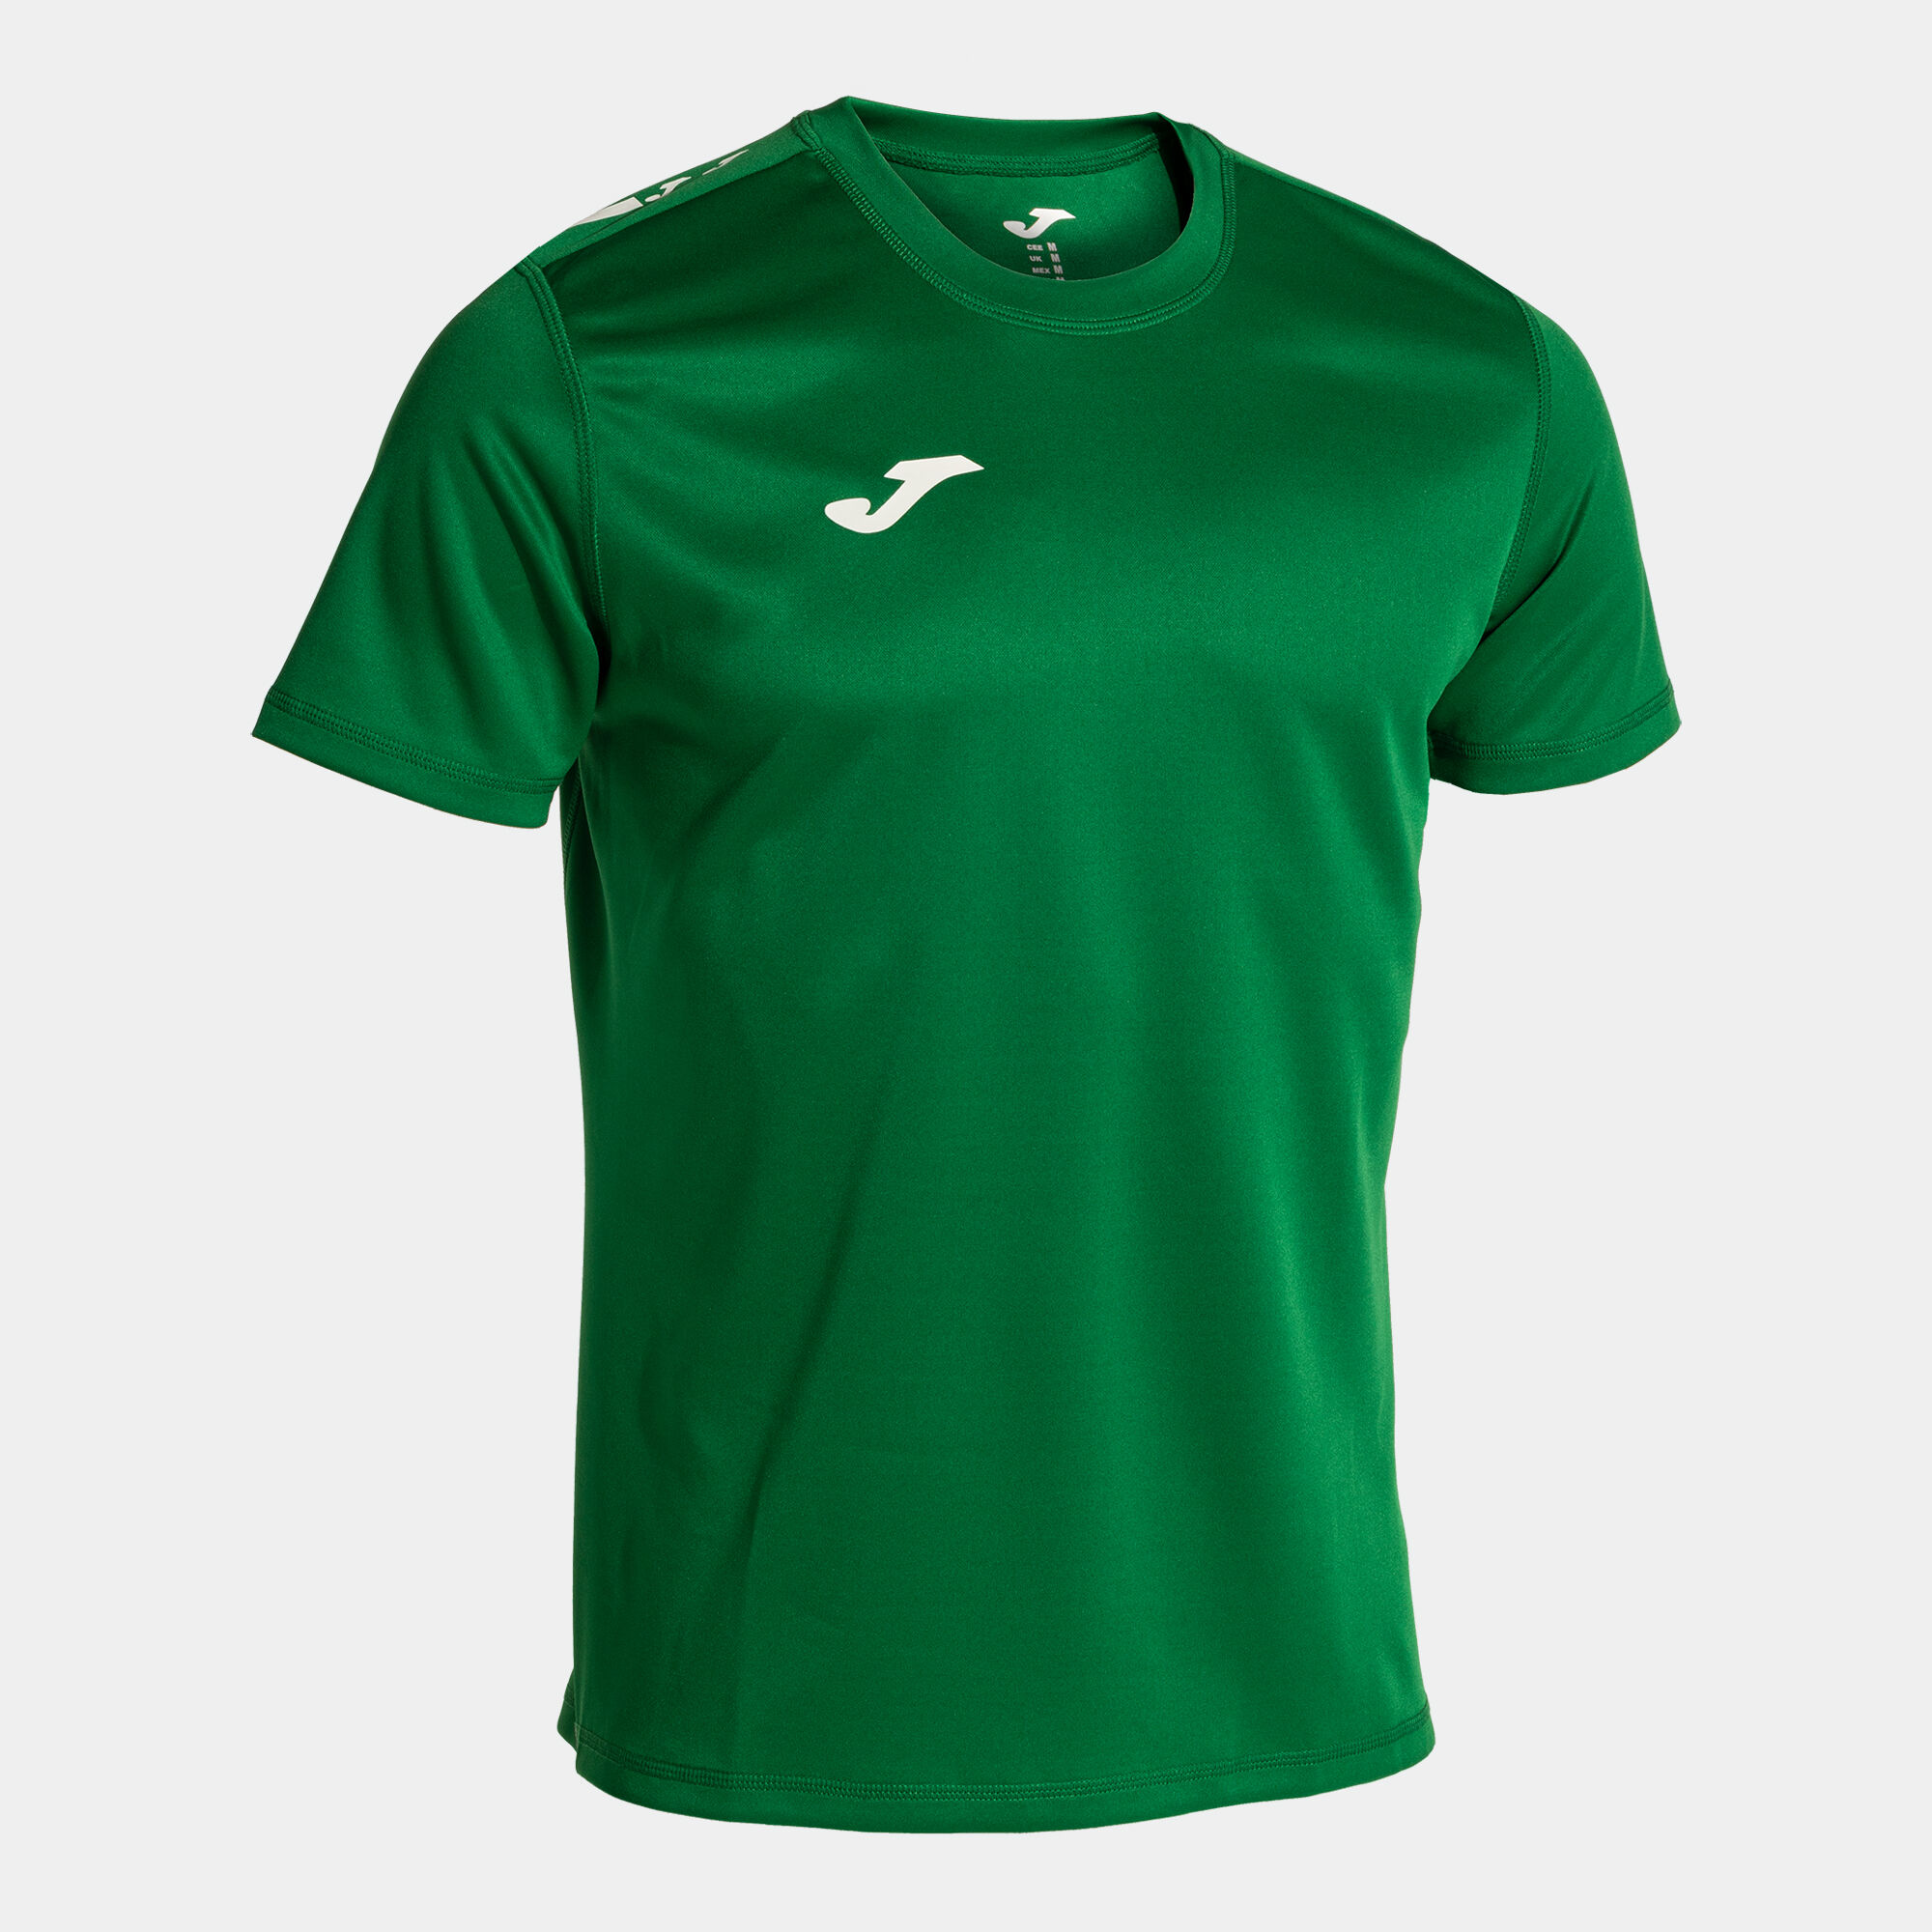 Camiseta manga corta hombre Olimpiada rugby verde